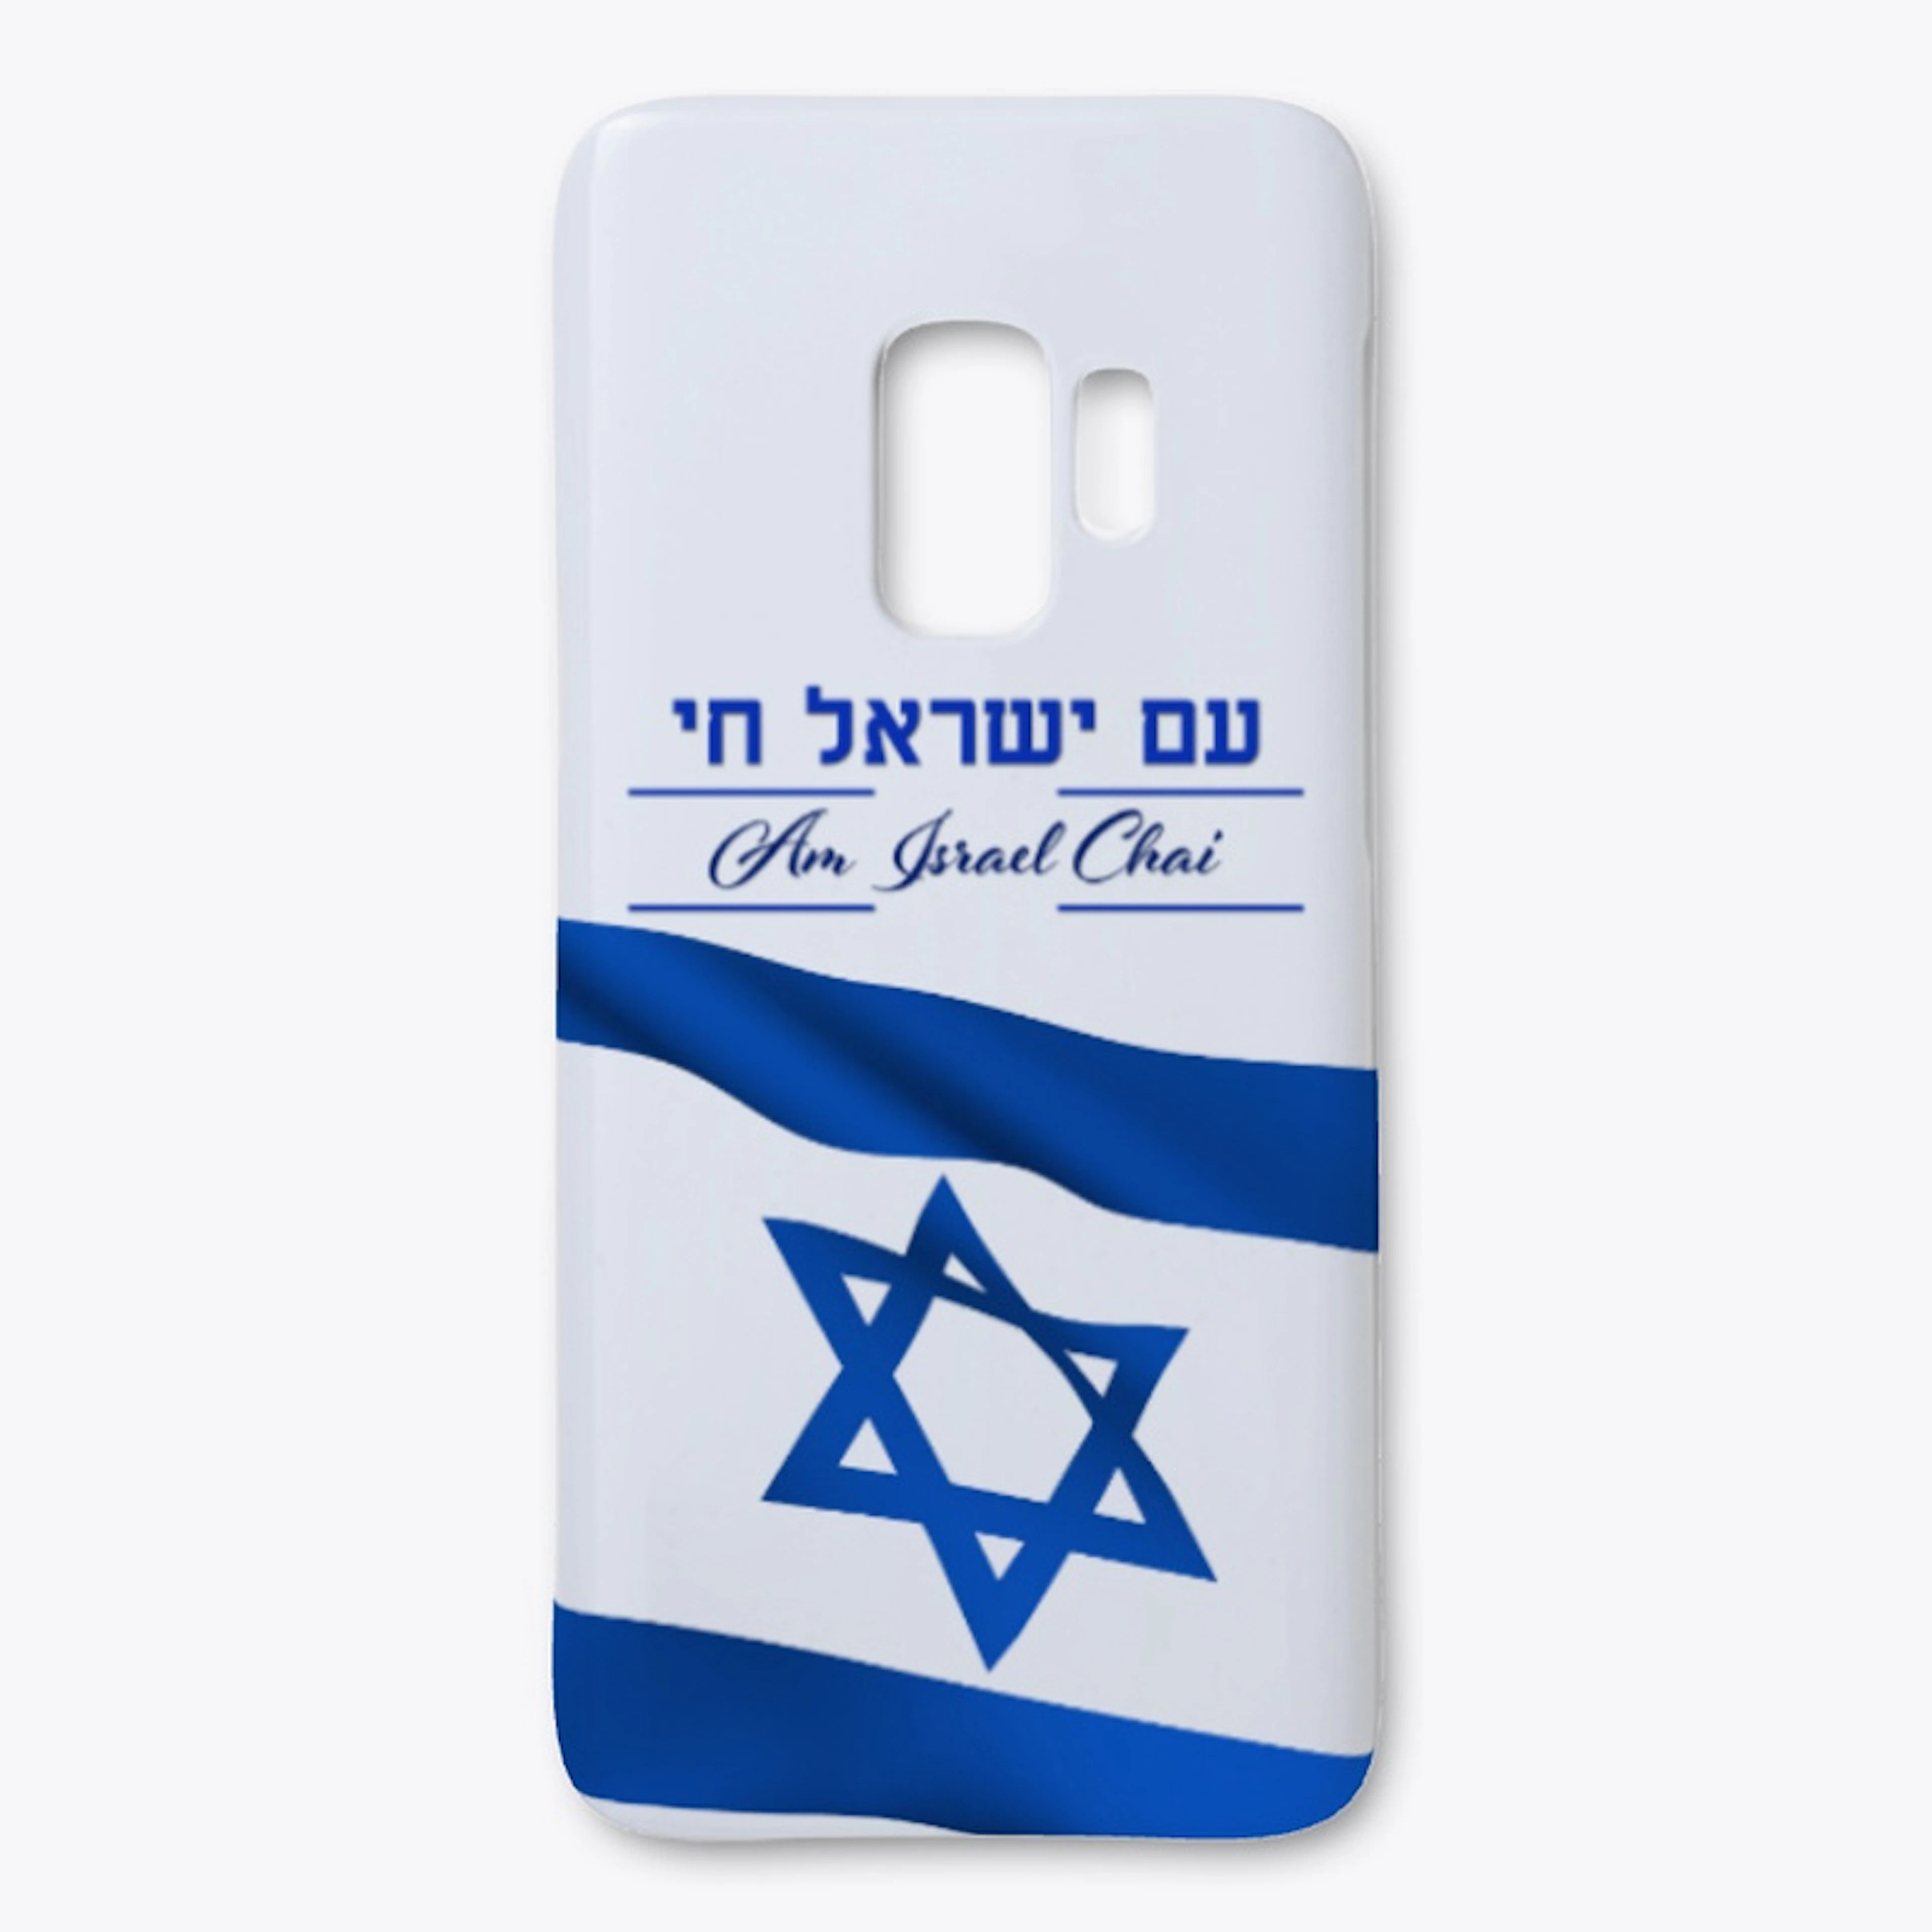 AM ISRAEL CHAI Phone Cases!